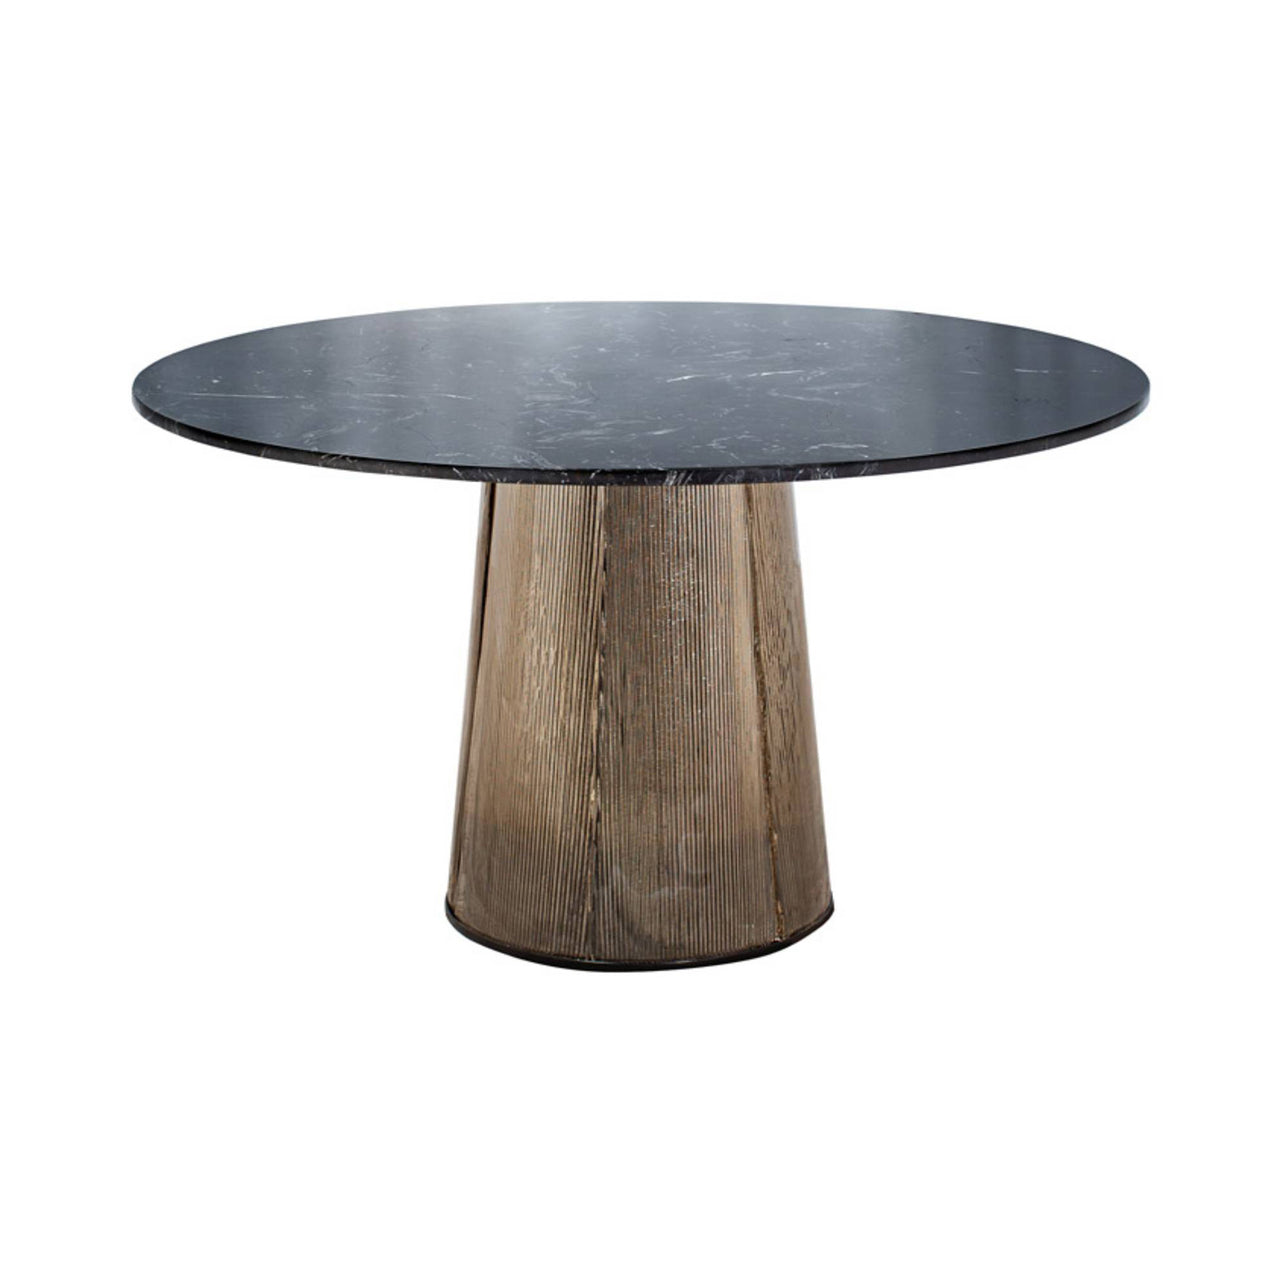 Bent Dining Table: Black + Smoky Grey